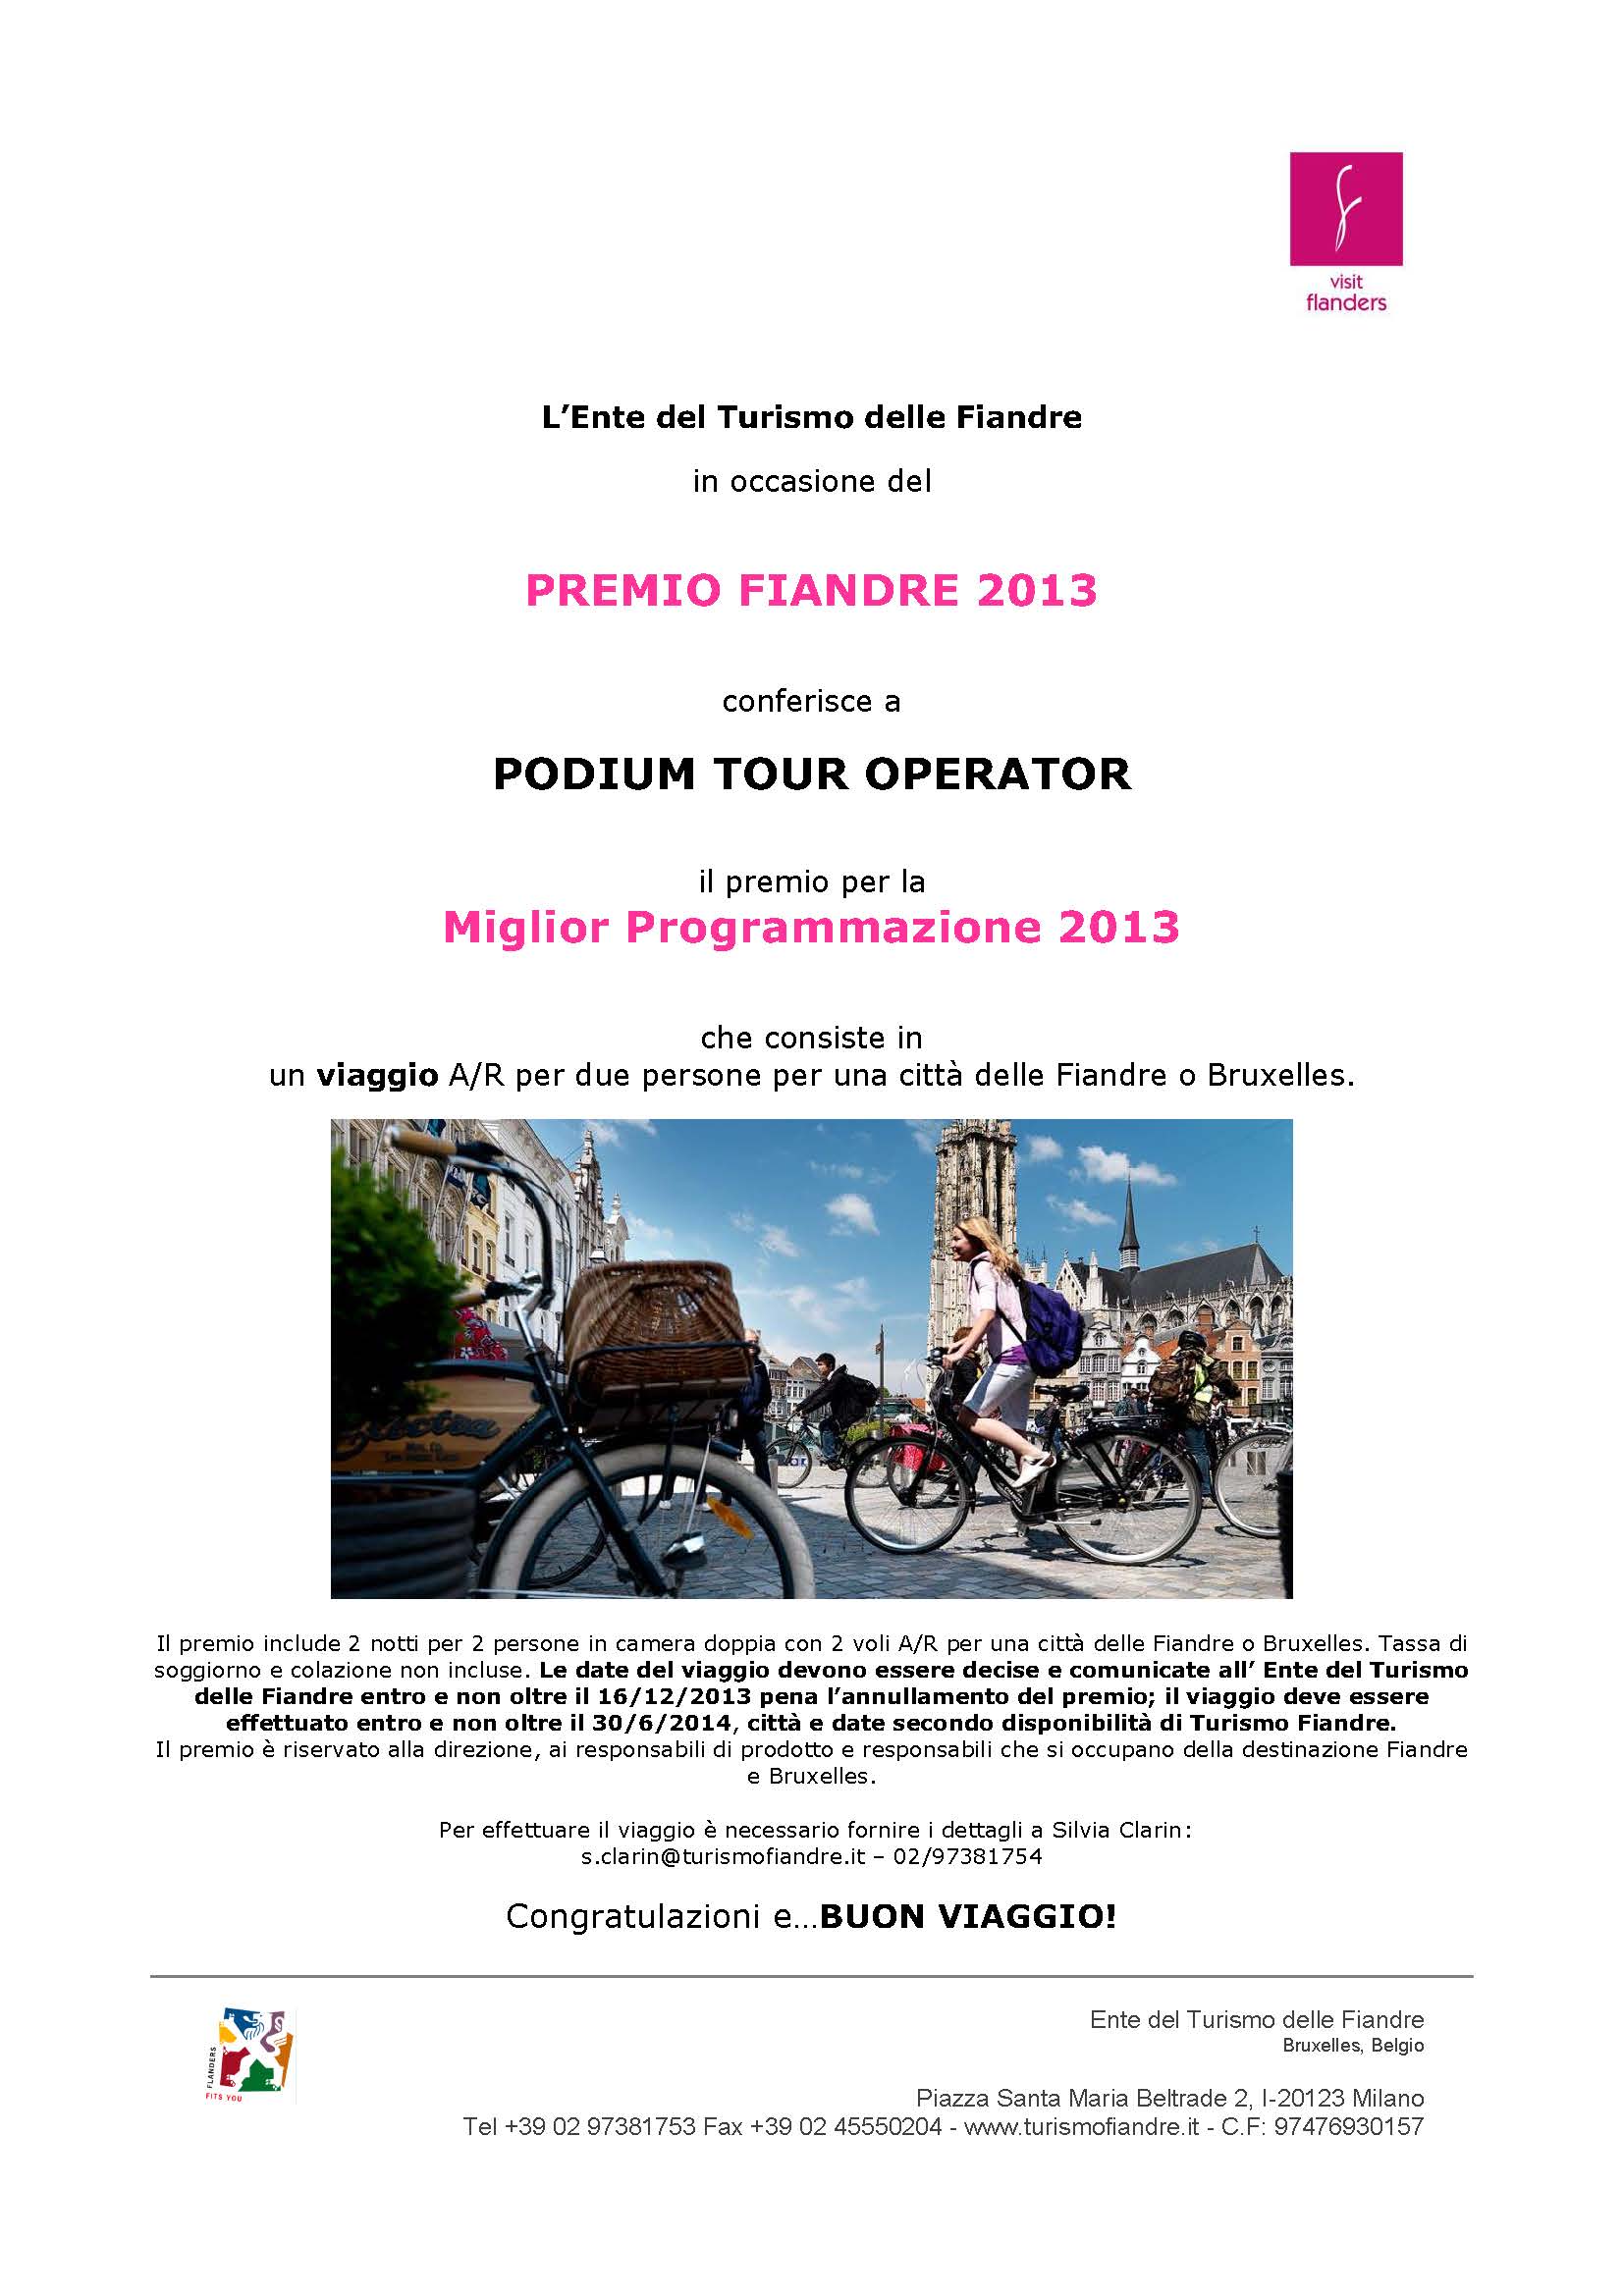 Podium Tour Operator vincitrice al Premio Fiandre 2013